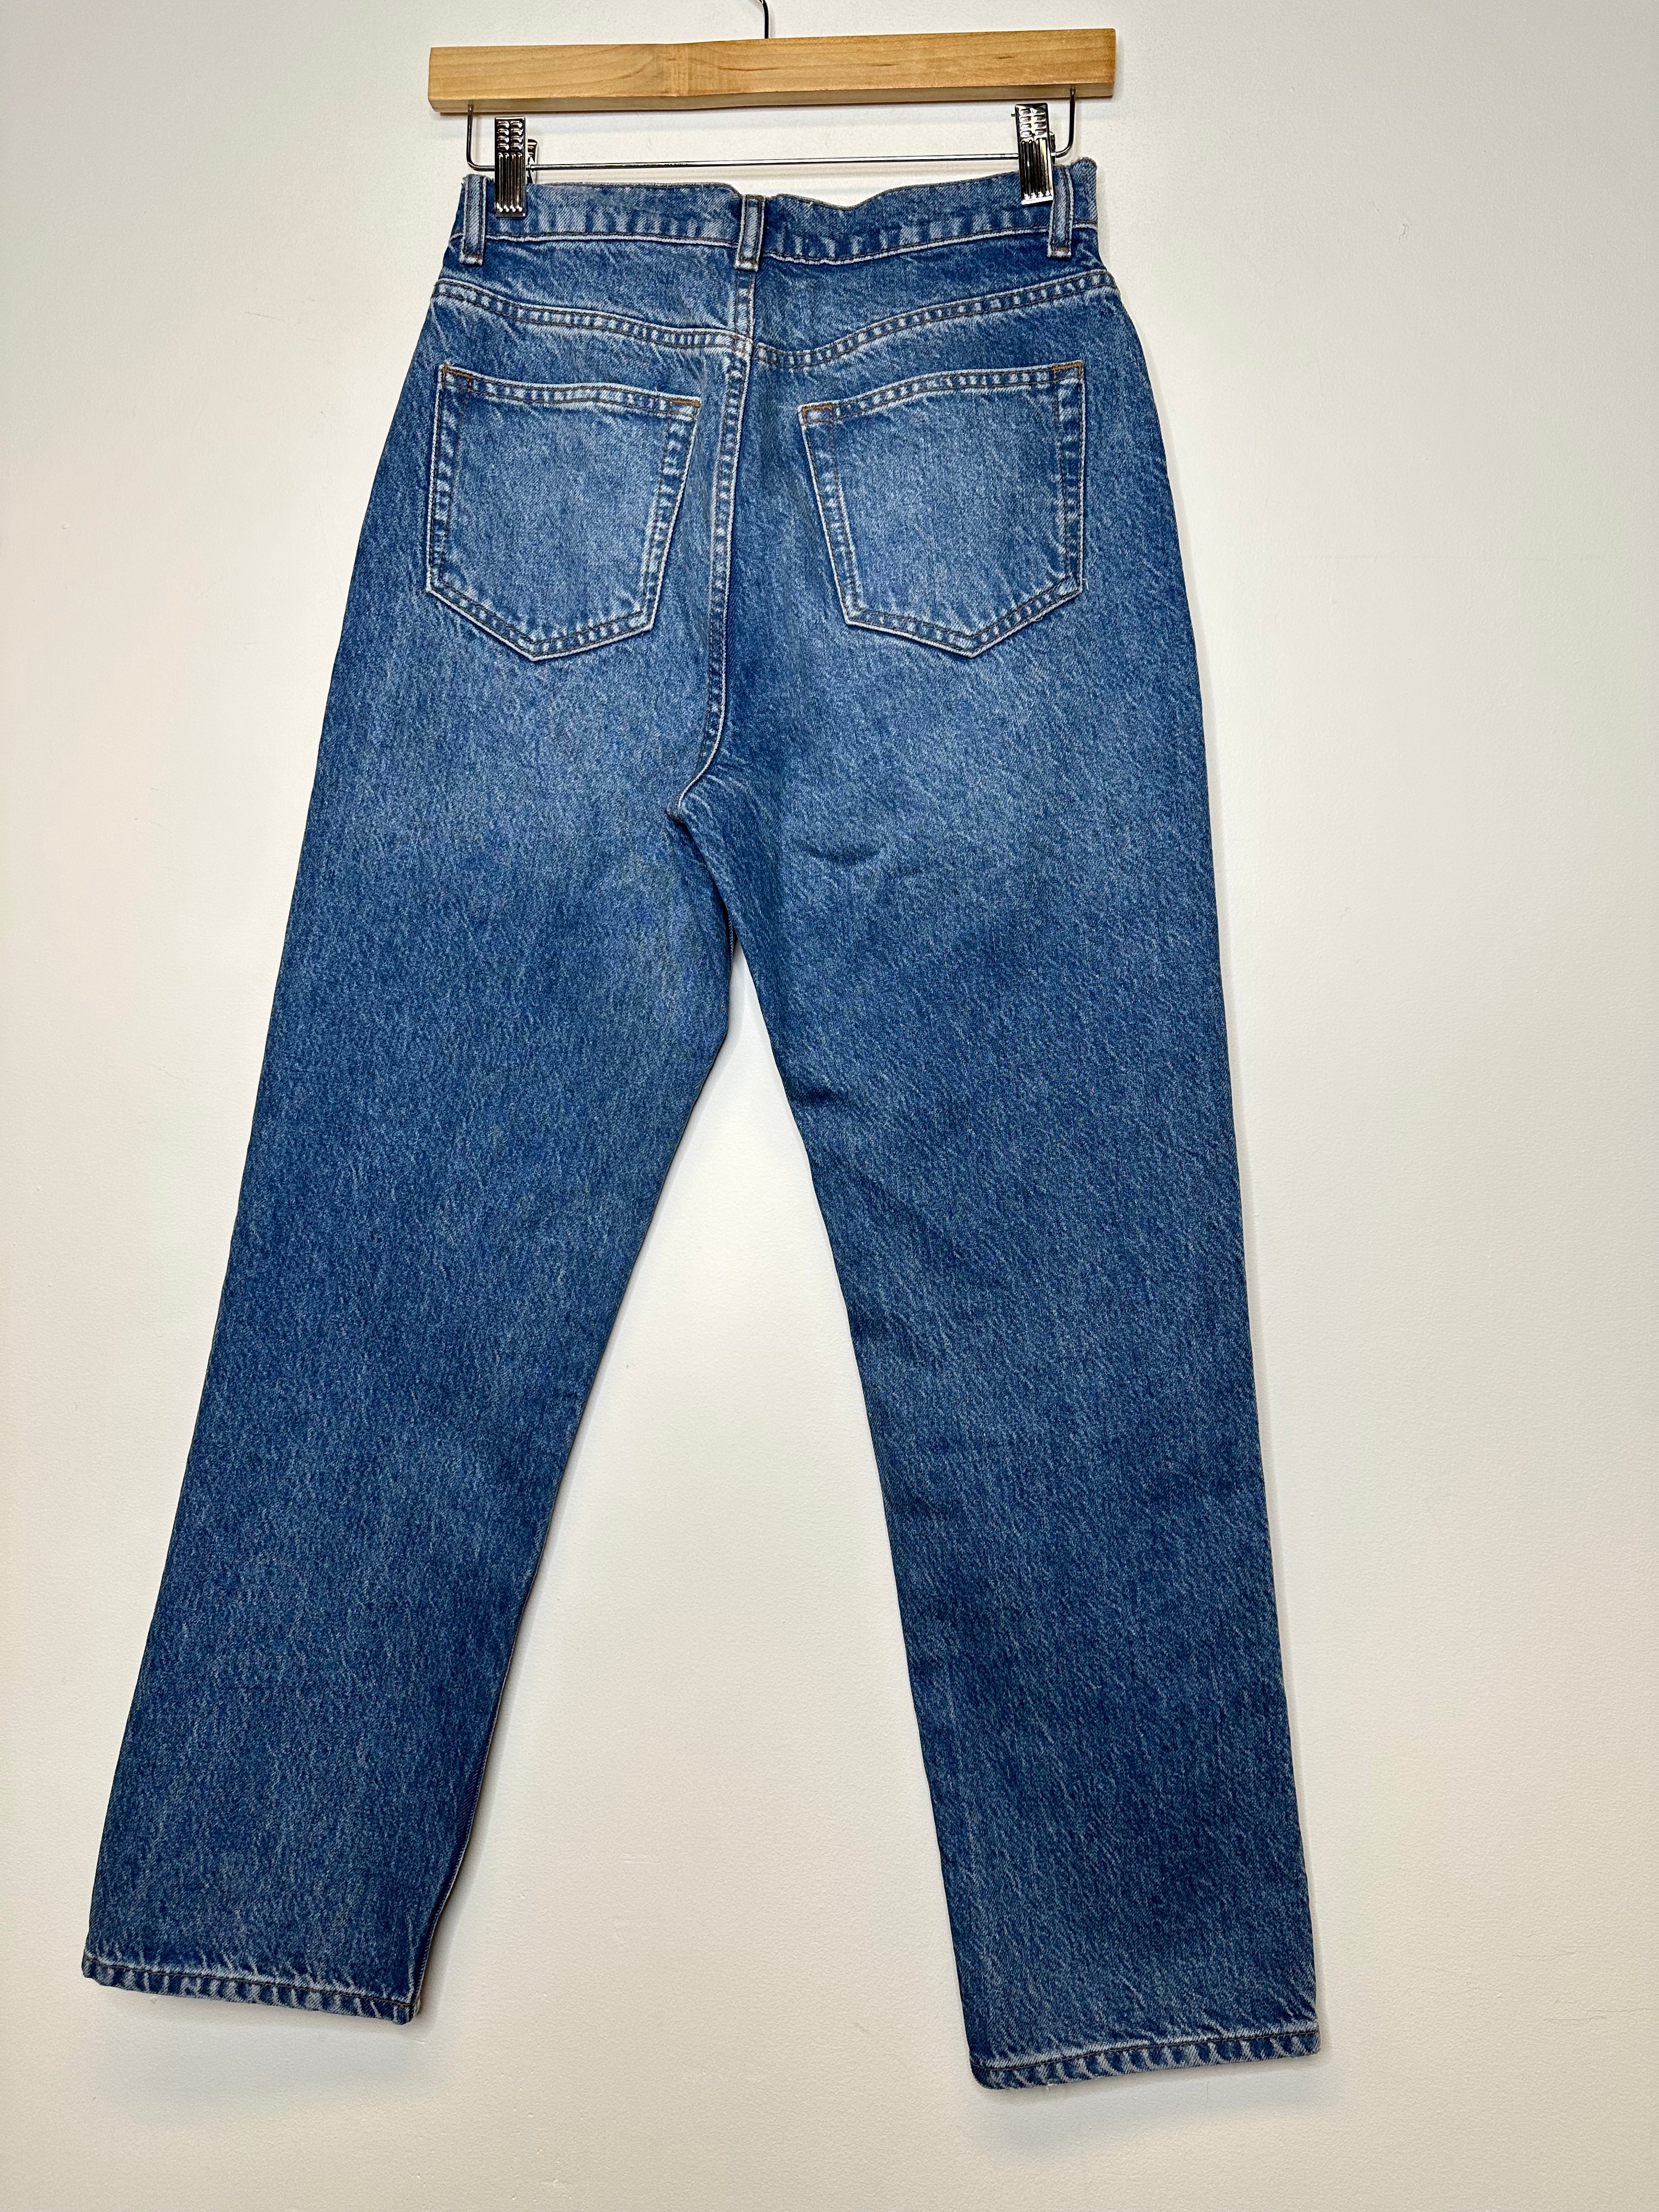 Reformation Blue Jeans - 25